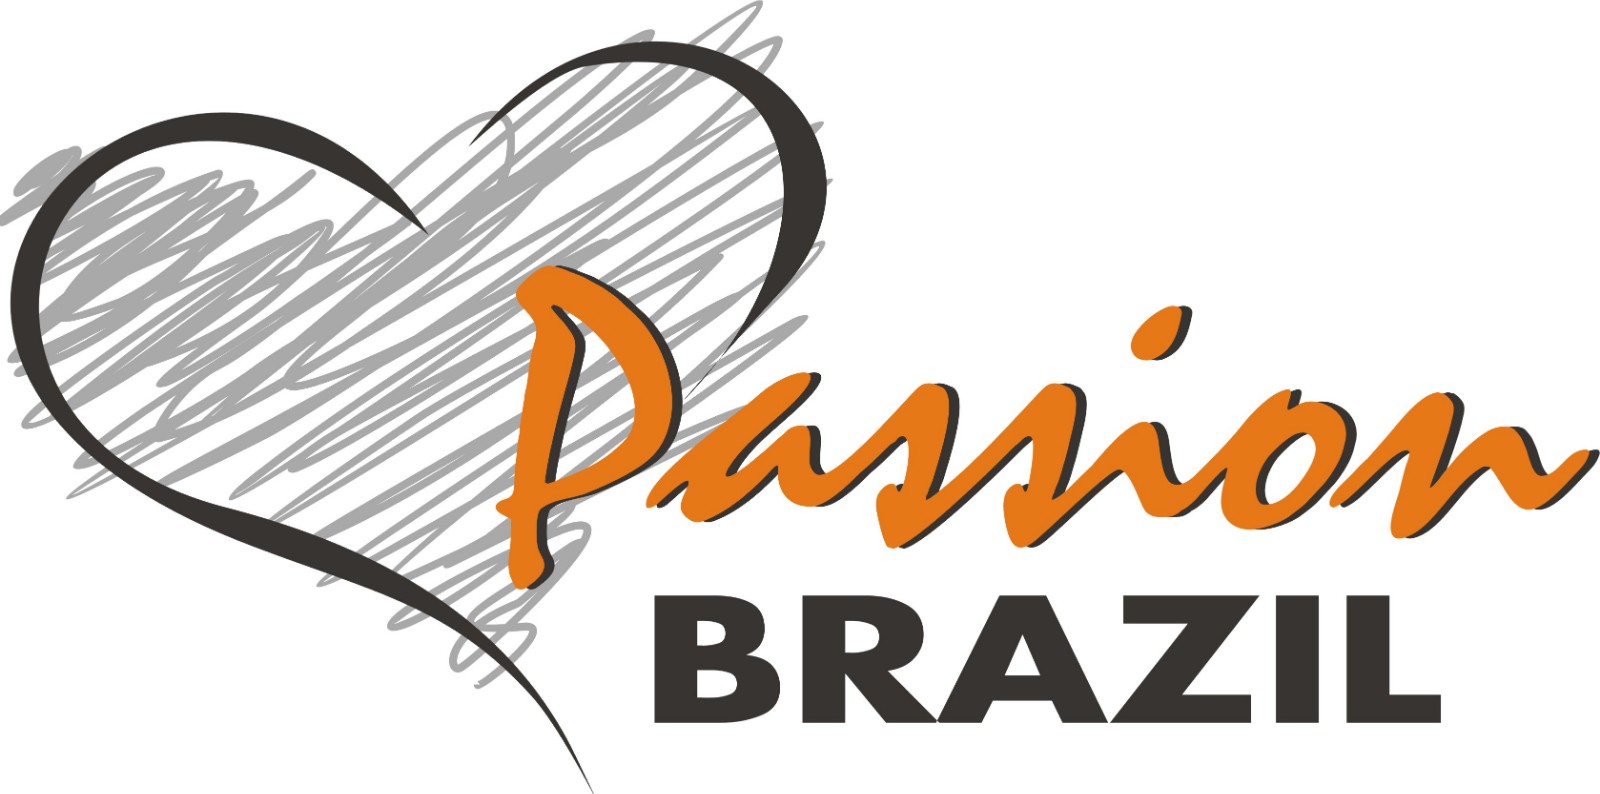 Passion Brazil